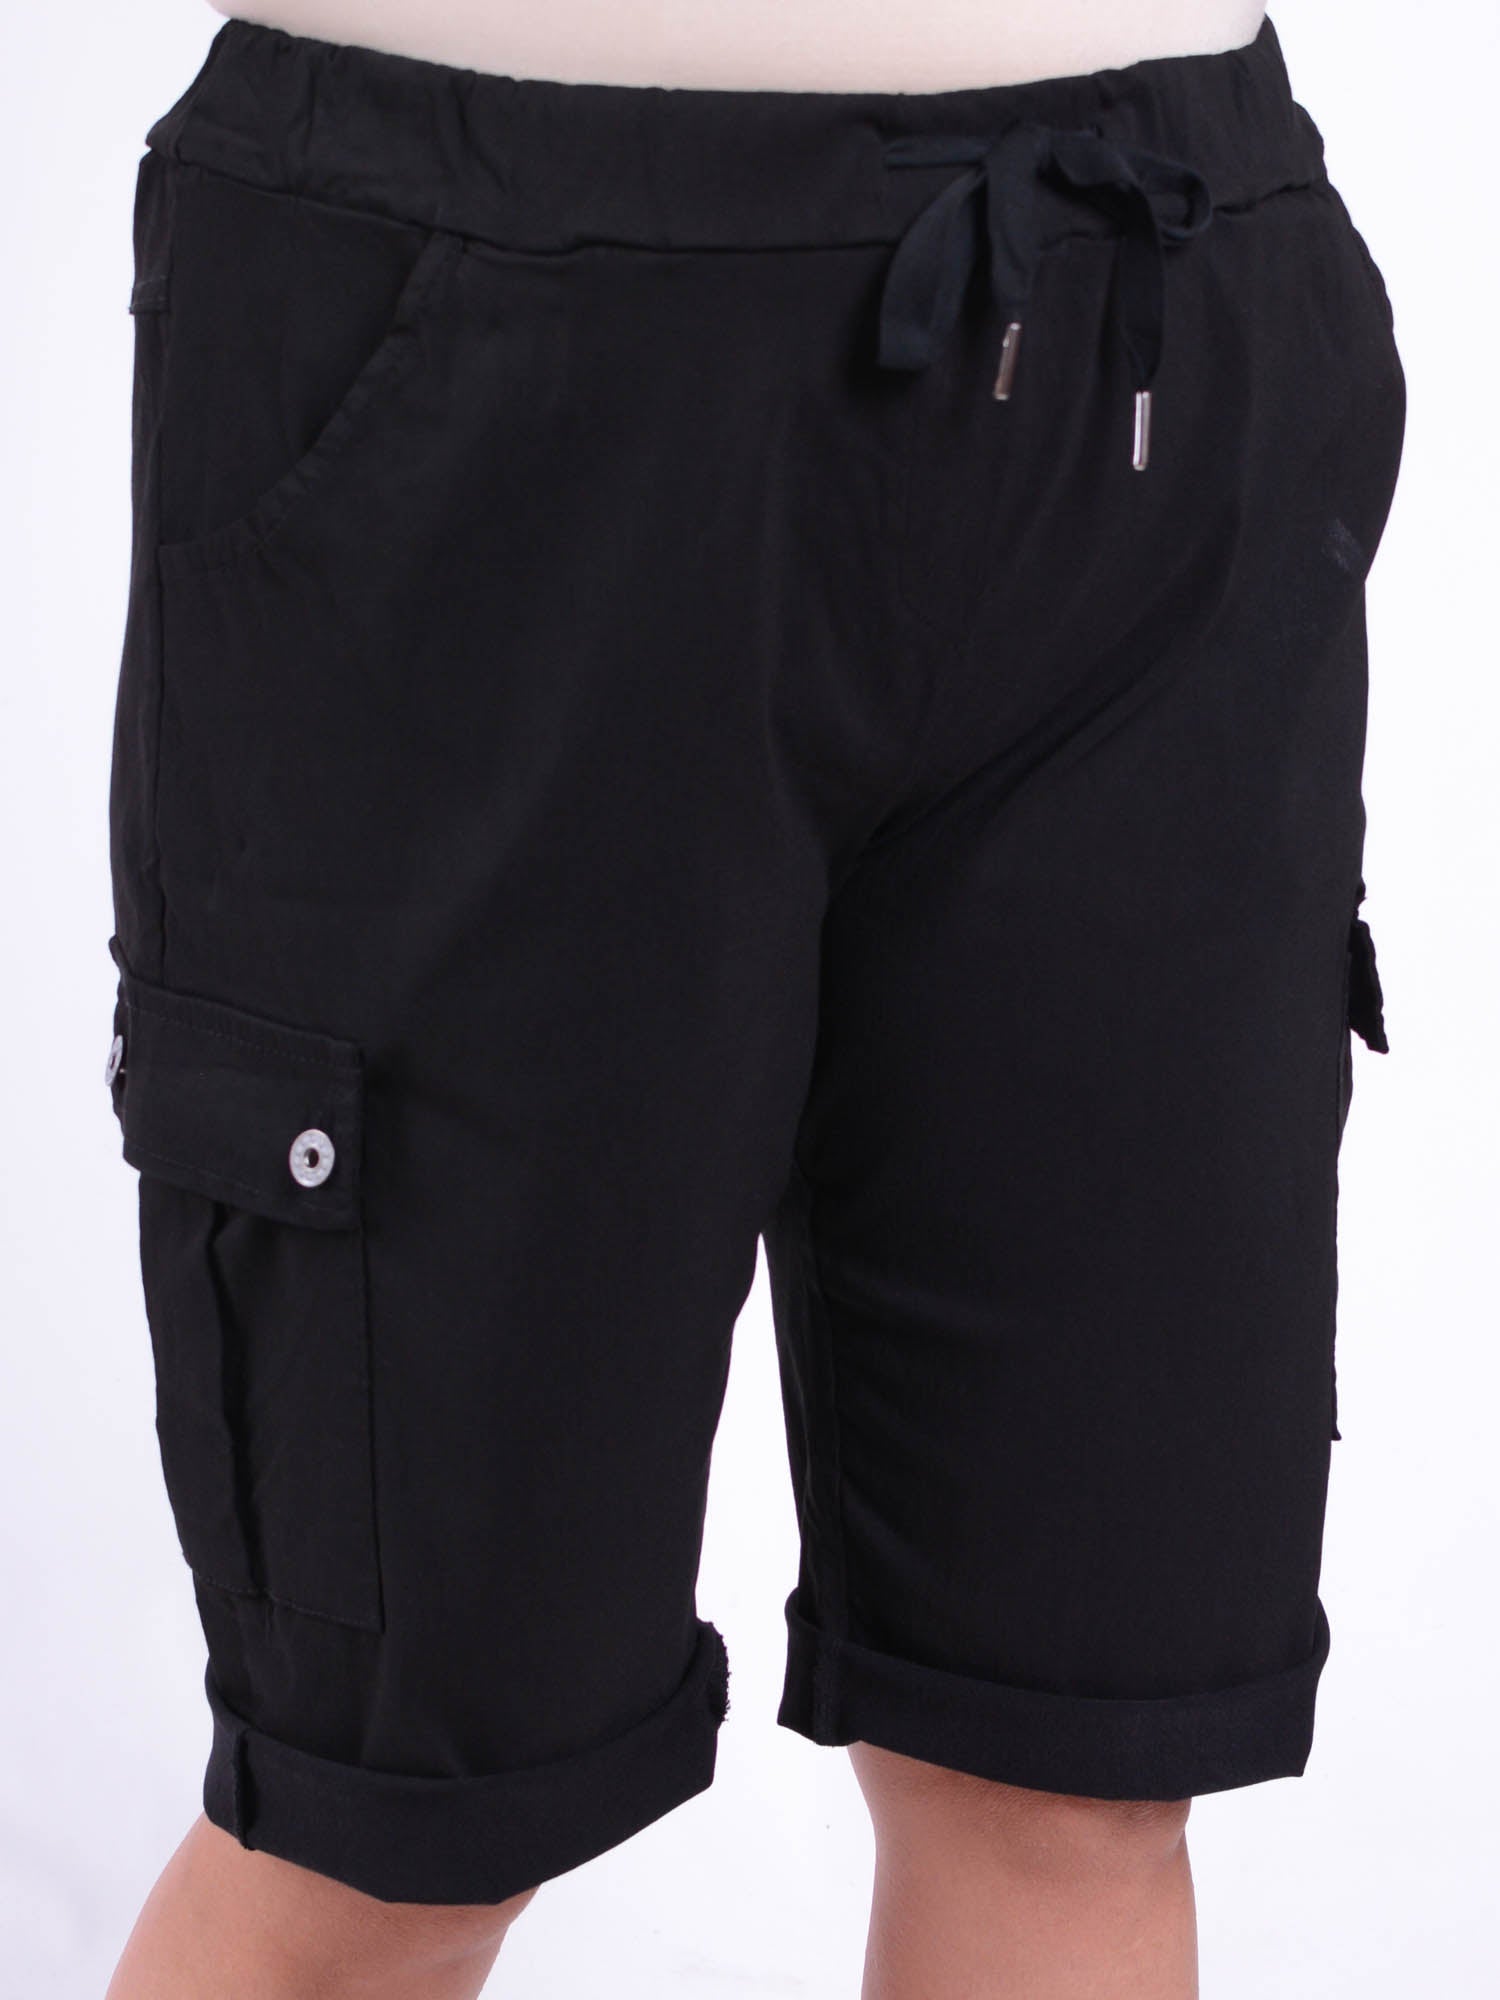 Magic Cargo Shorts - 10642A, Shorts, Pure Plus Clothing, Lagenlook Clothing, Plus Size Fashion, Over 50 Fashion